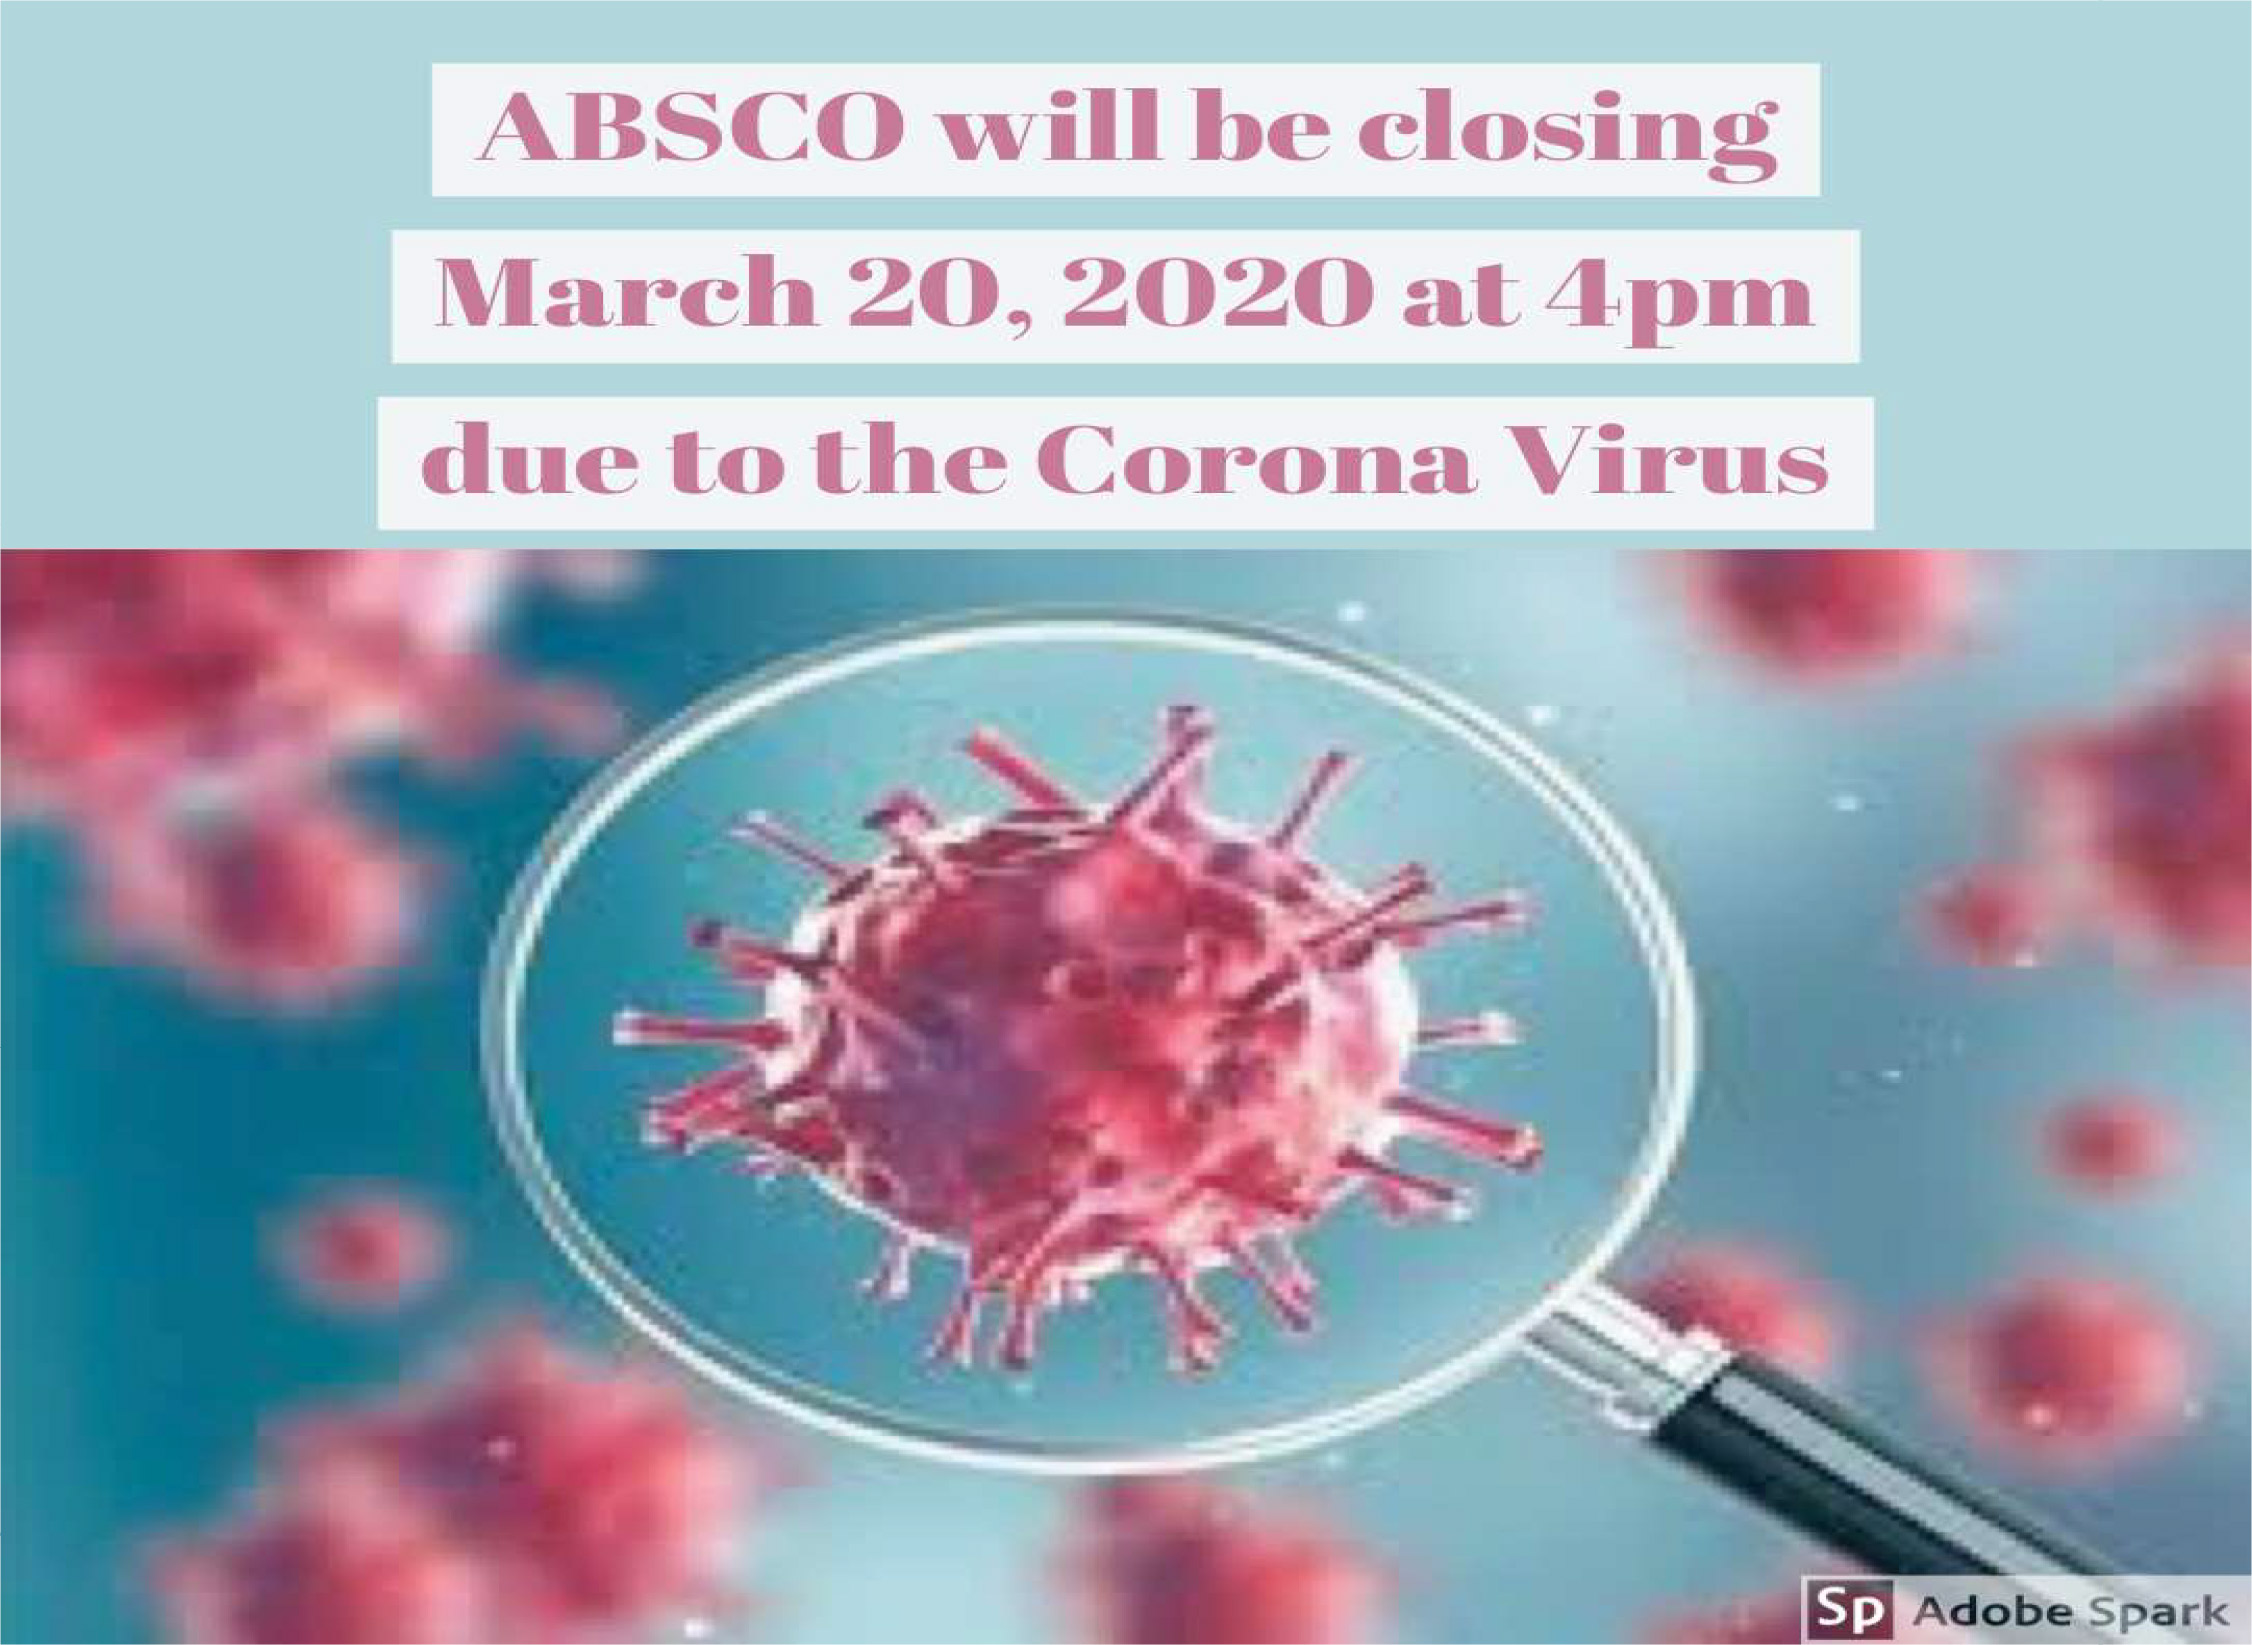 ABSCO - Temporary Store Closings due to Coronavirus COVID-19